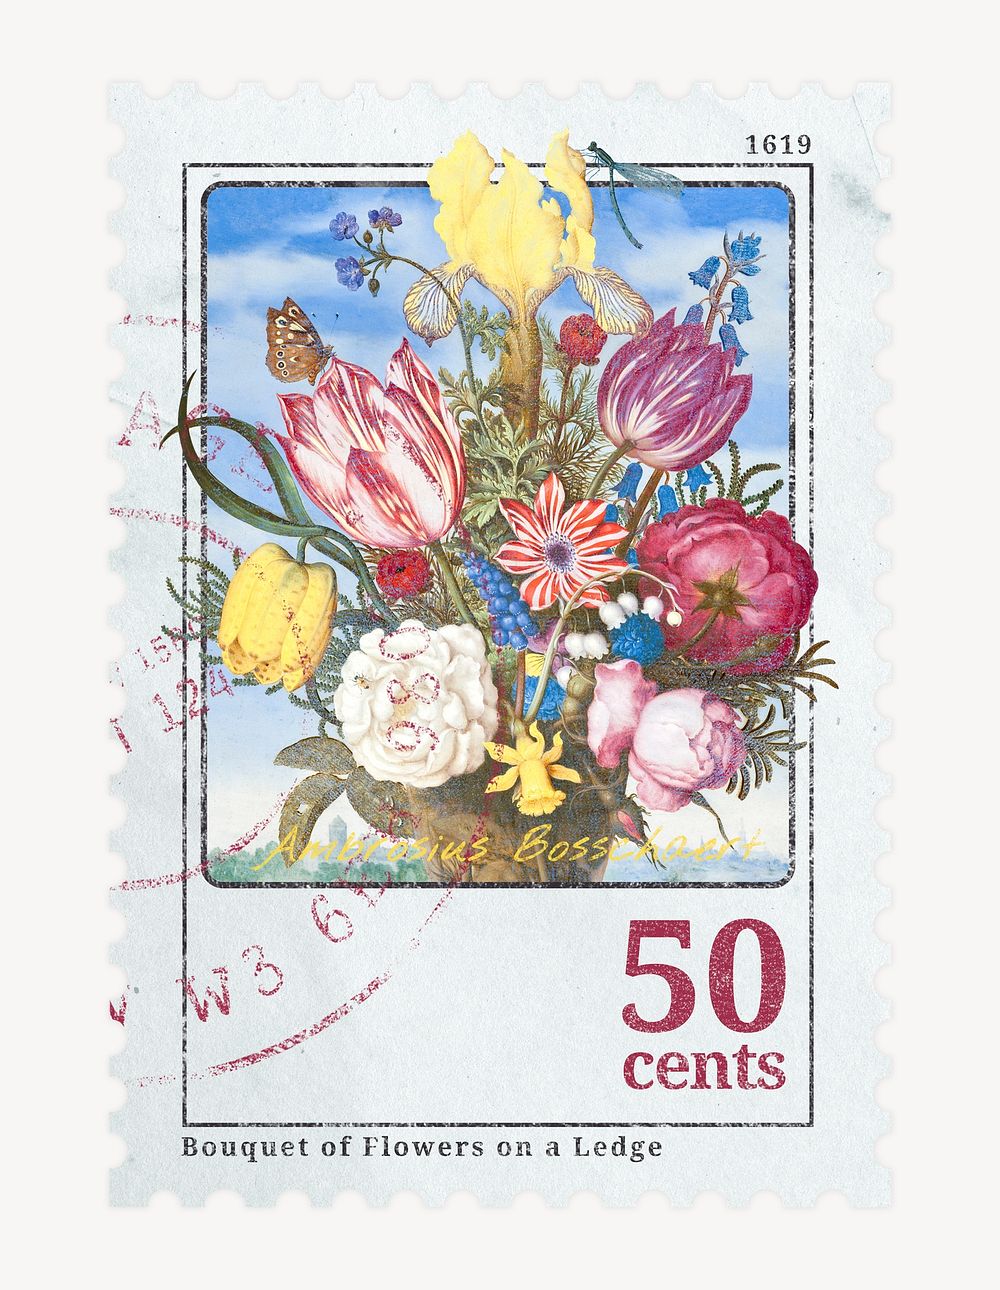 Aesthetic floral postage stamp, botanical illustration